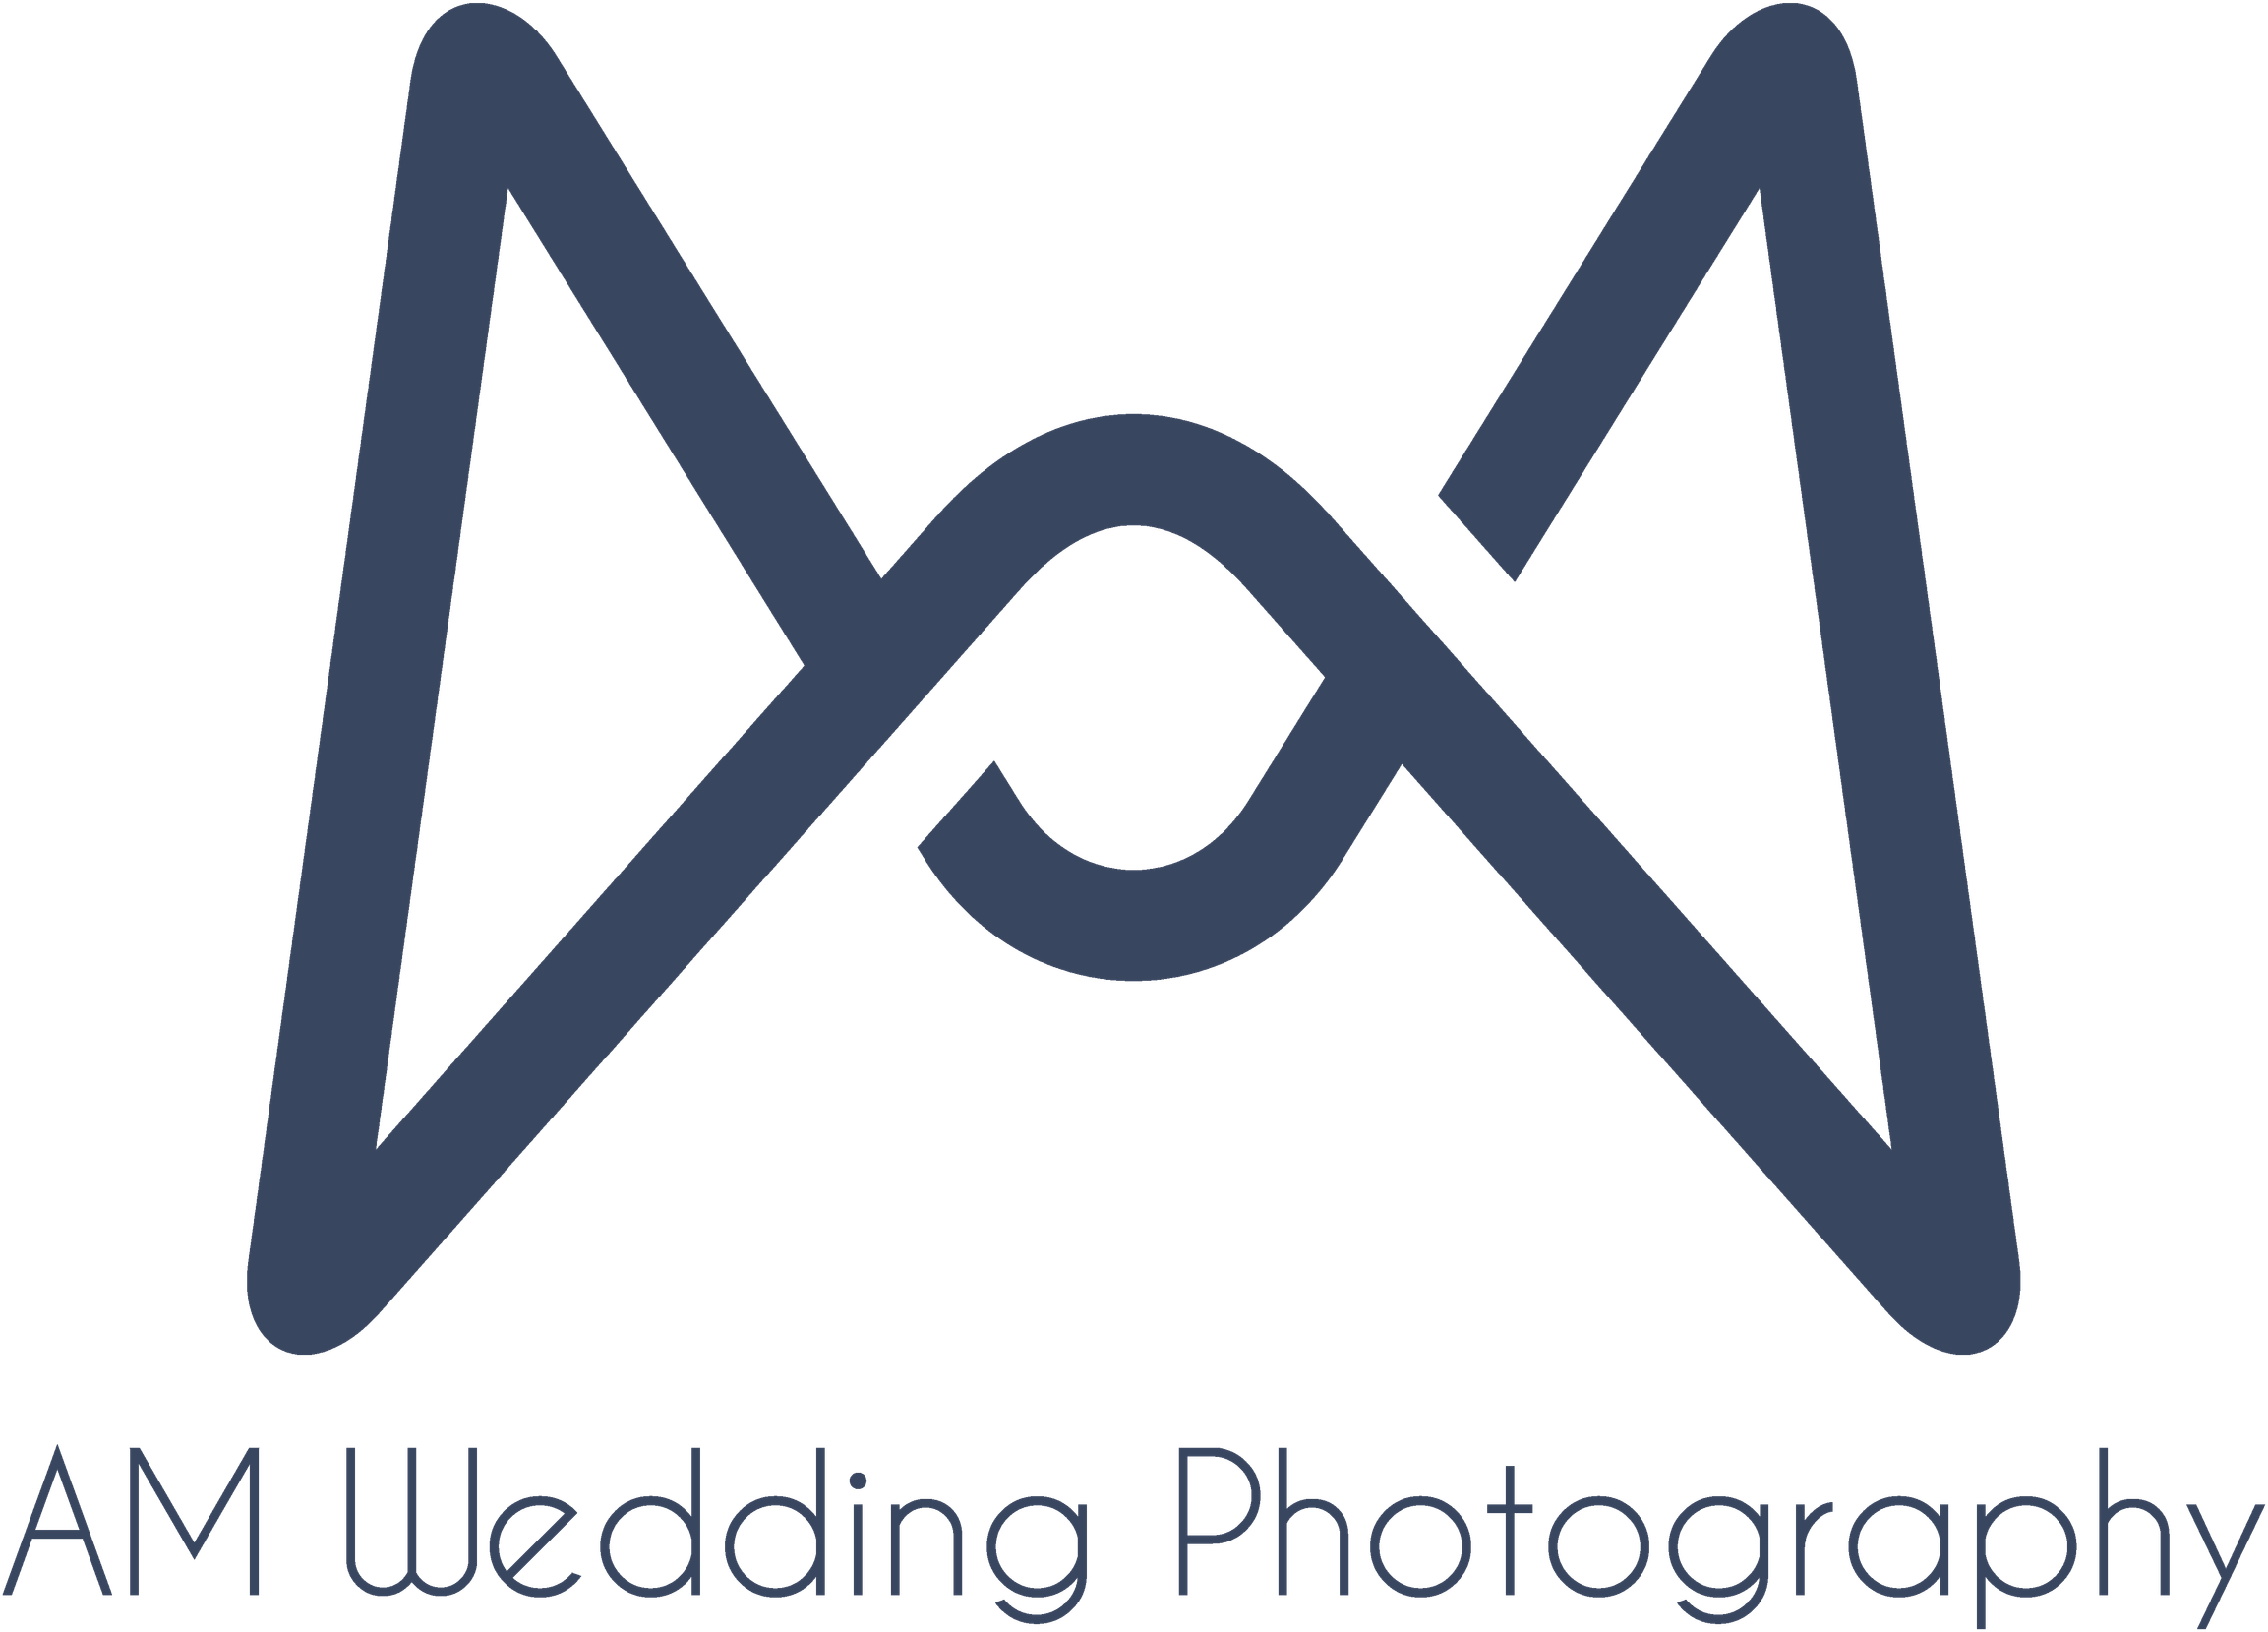 AM Wedding Photography